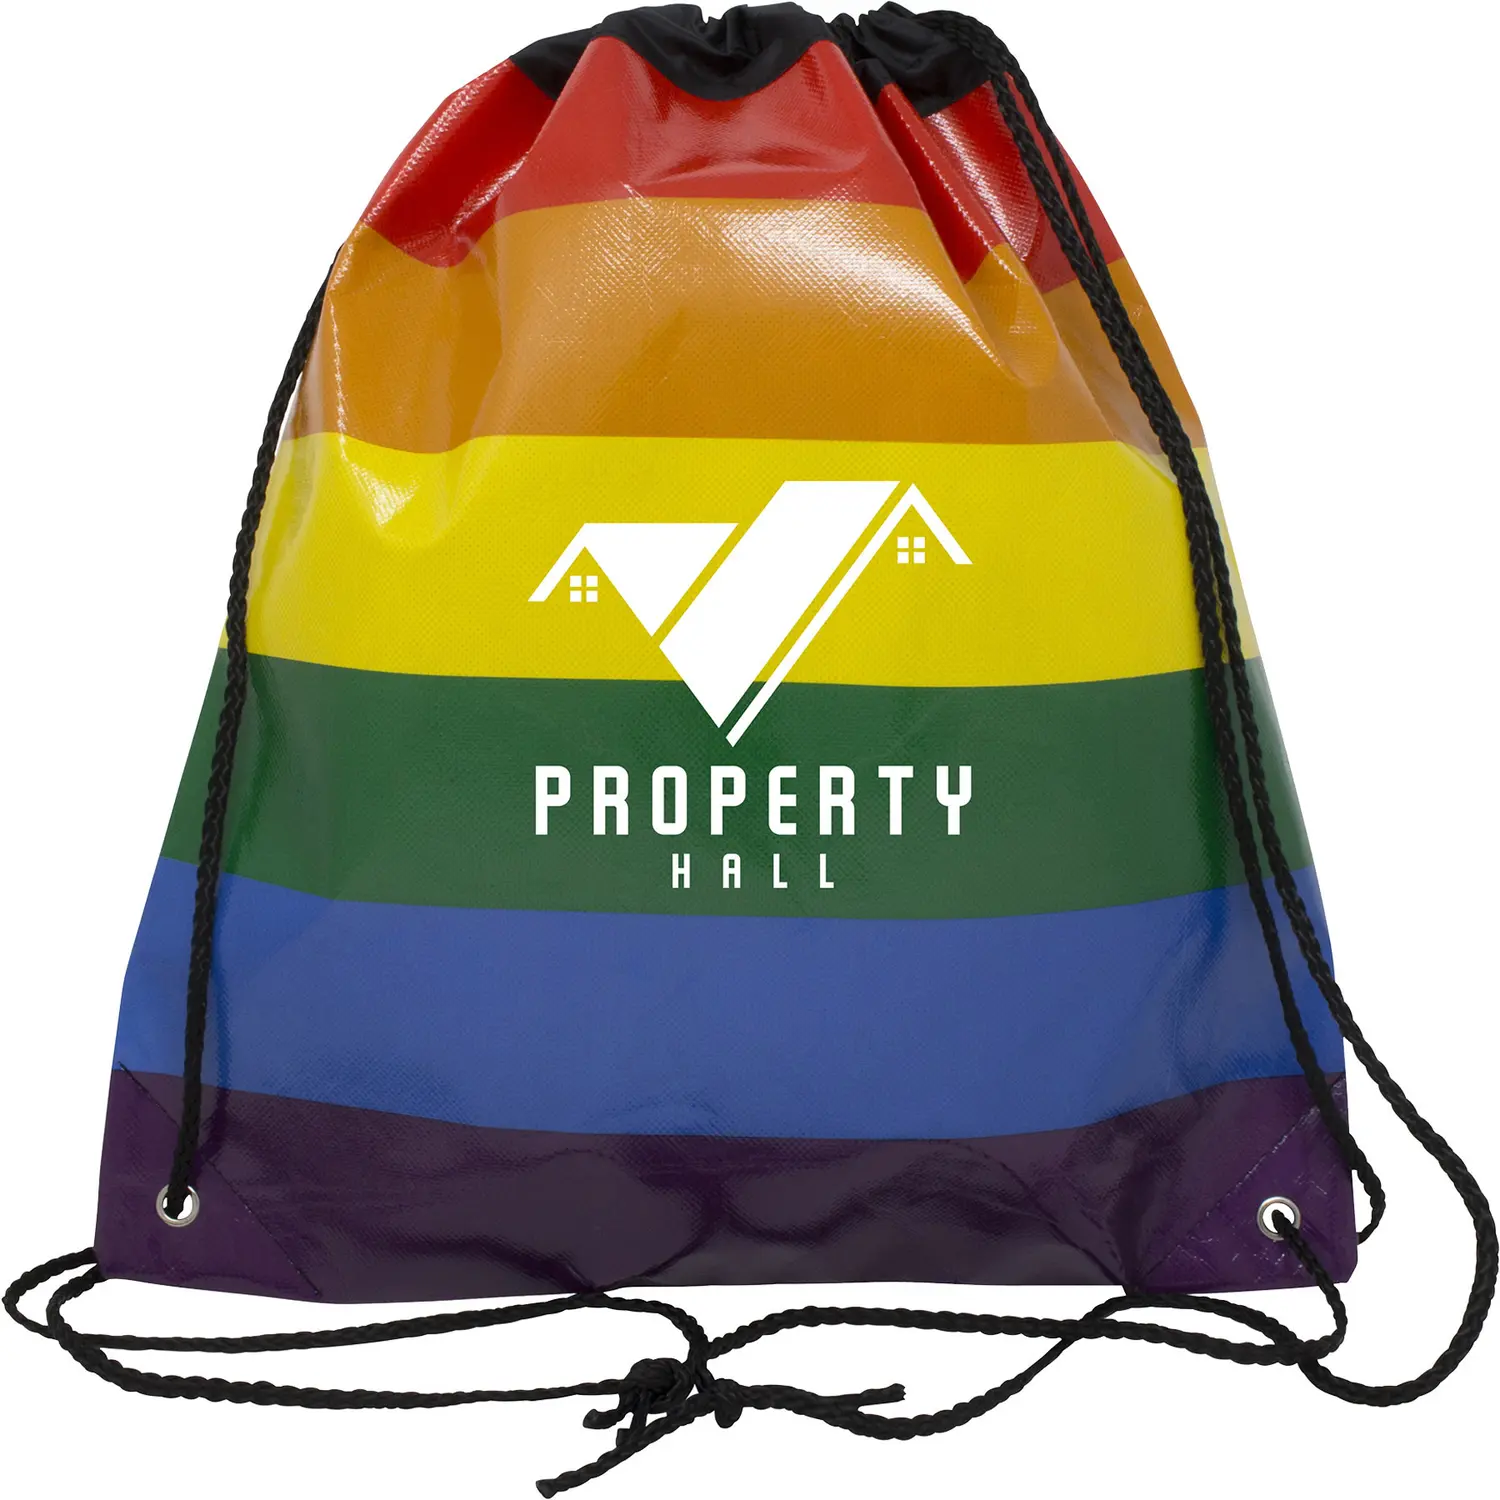 Promotional Jumbo Rainbow Backpack with Drawstring Closure